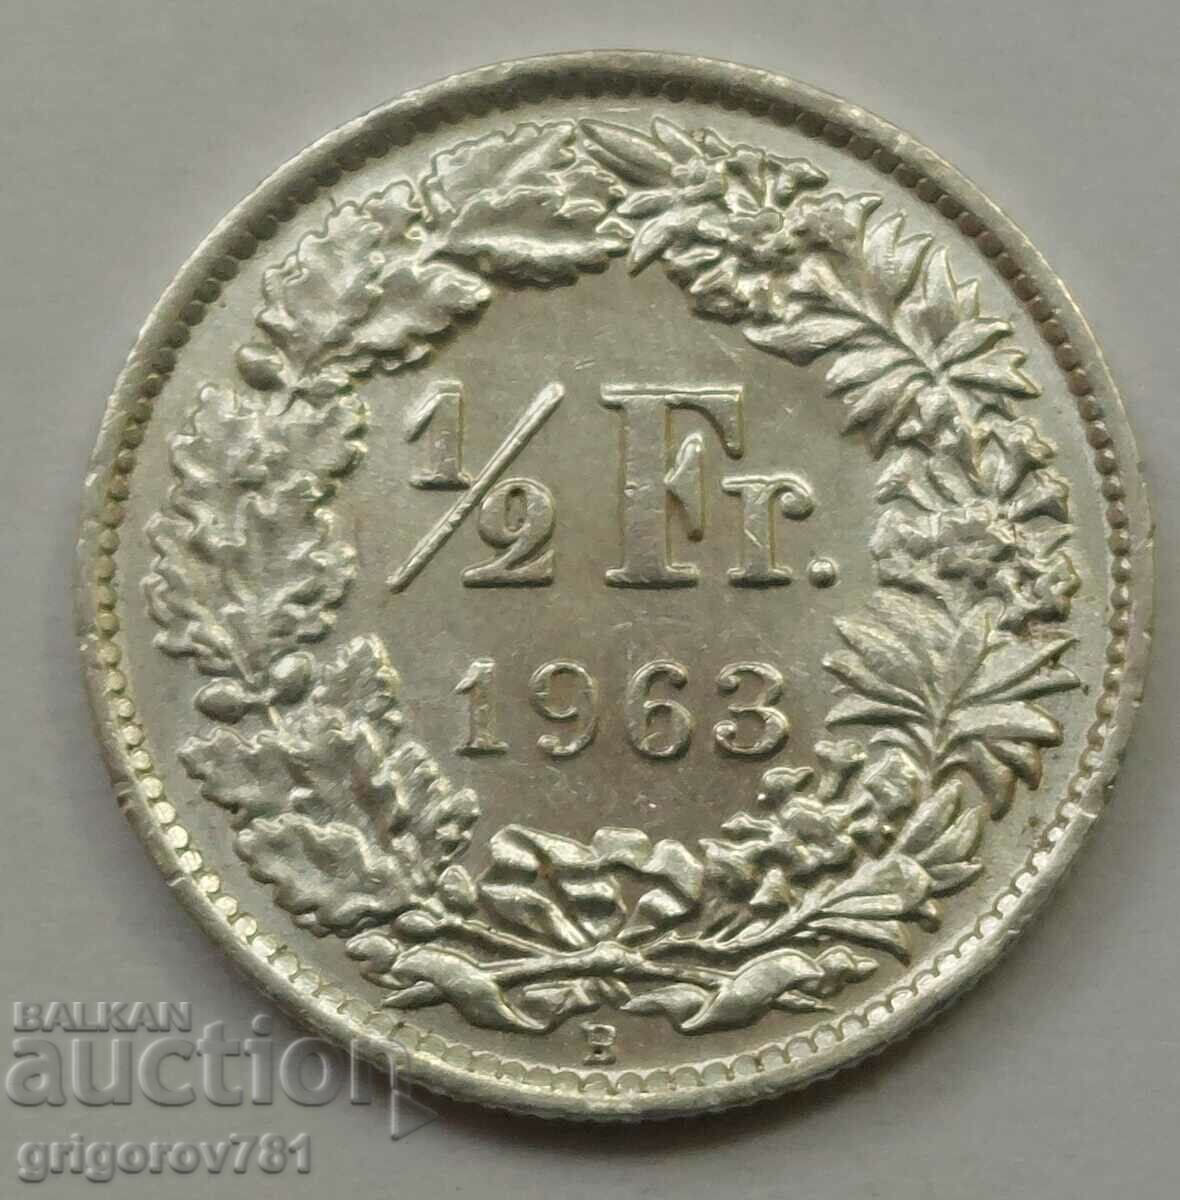 1/2 Franc Silver Switzerland 1963 B - Silver Coin #152